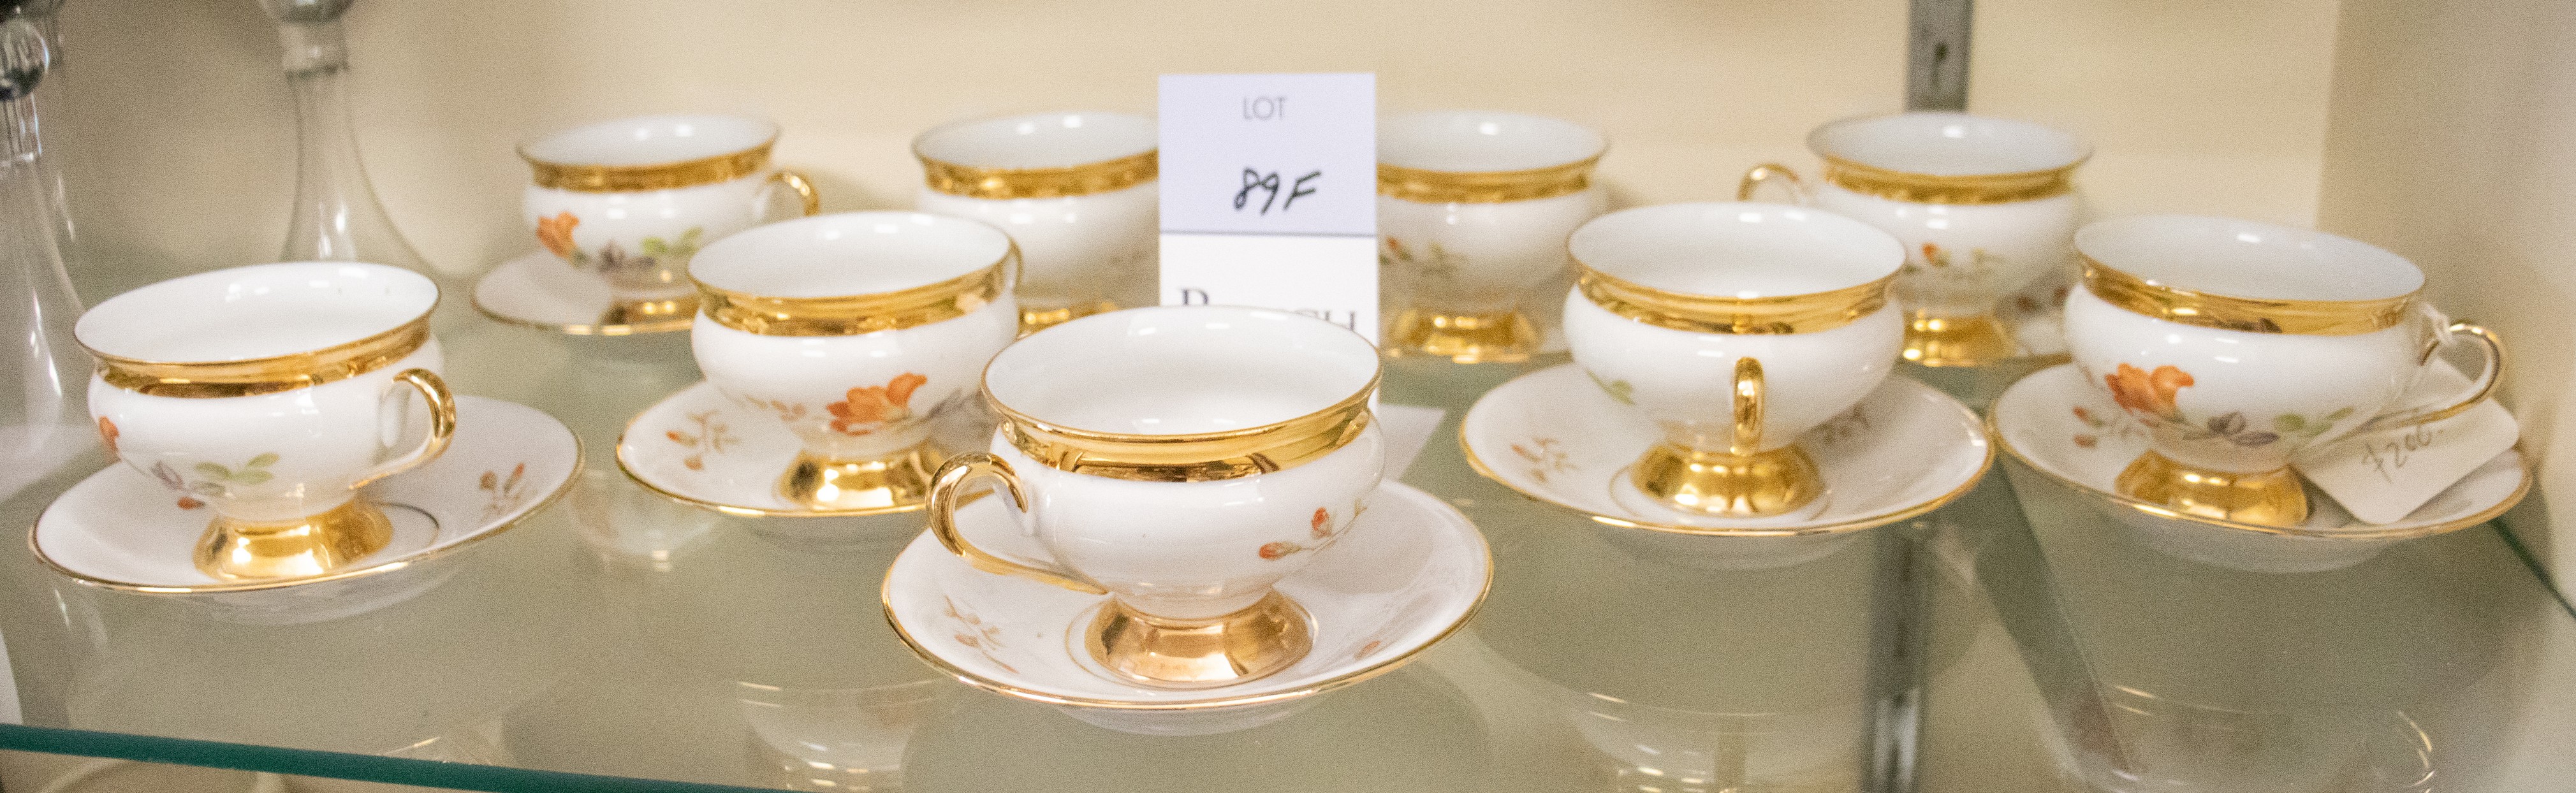 (9) Porcelain footed demitasse cups